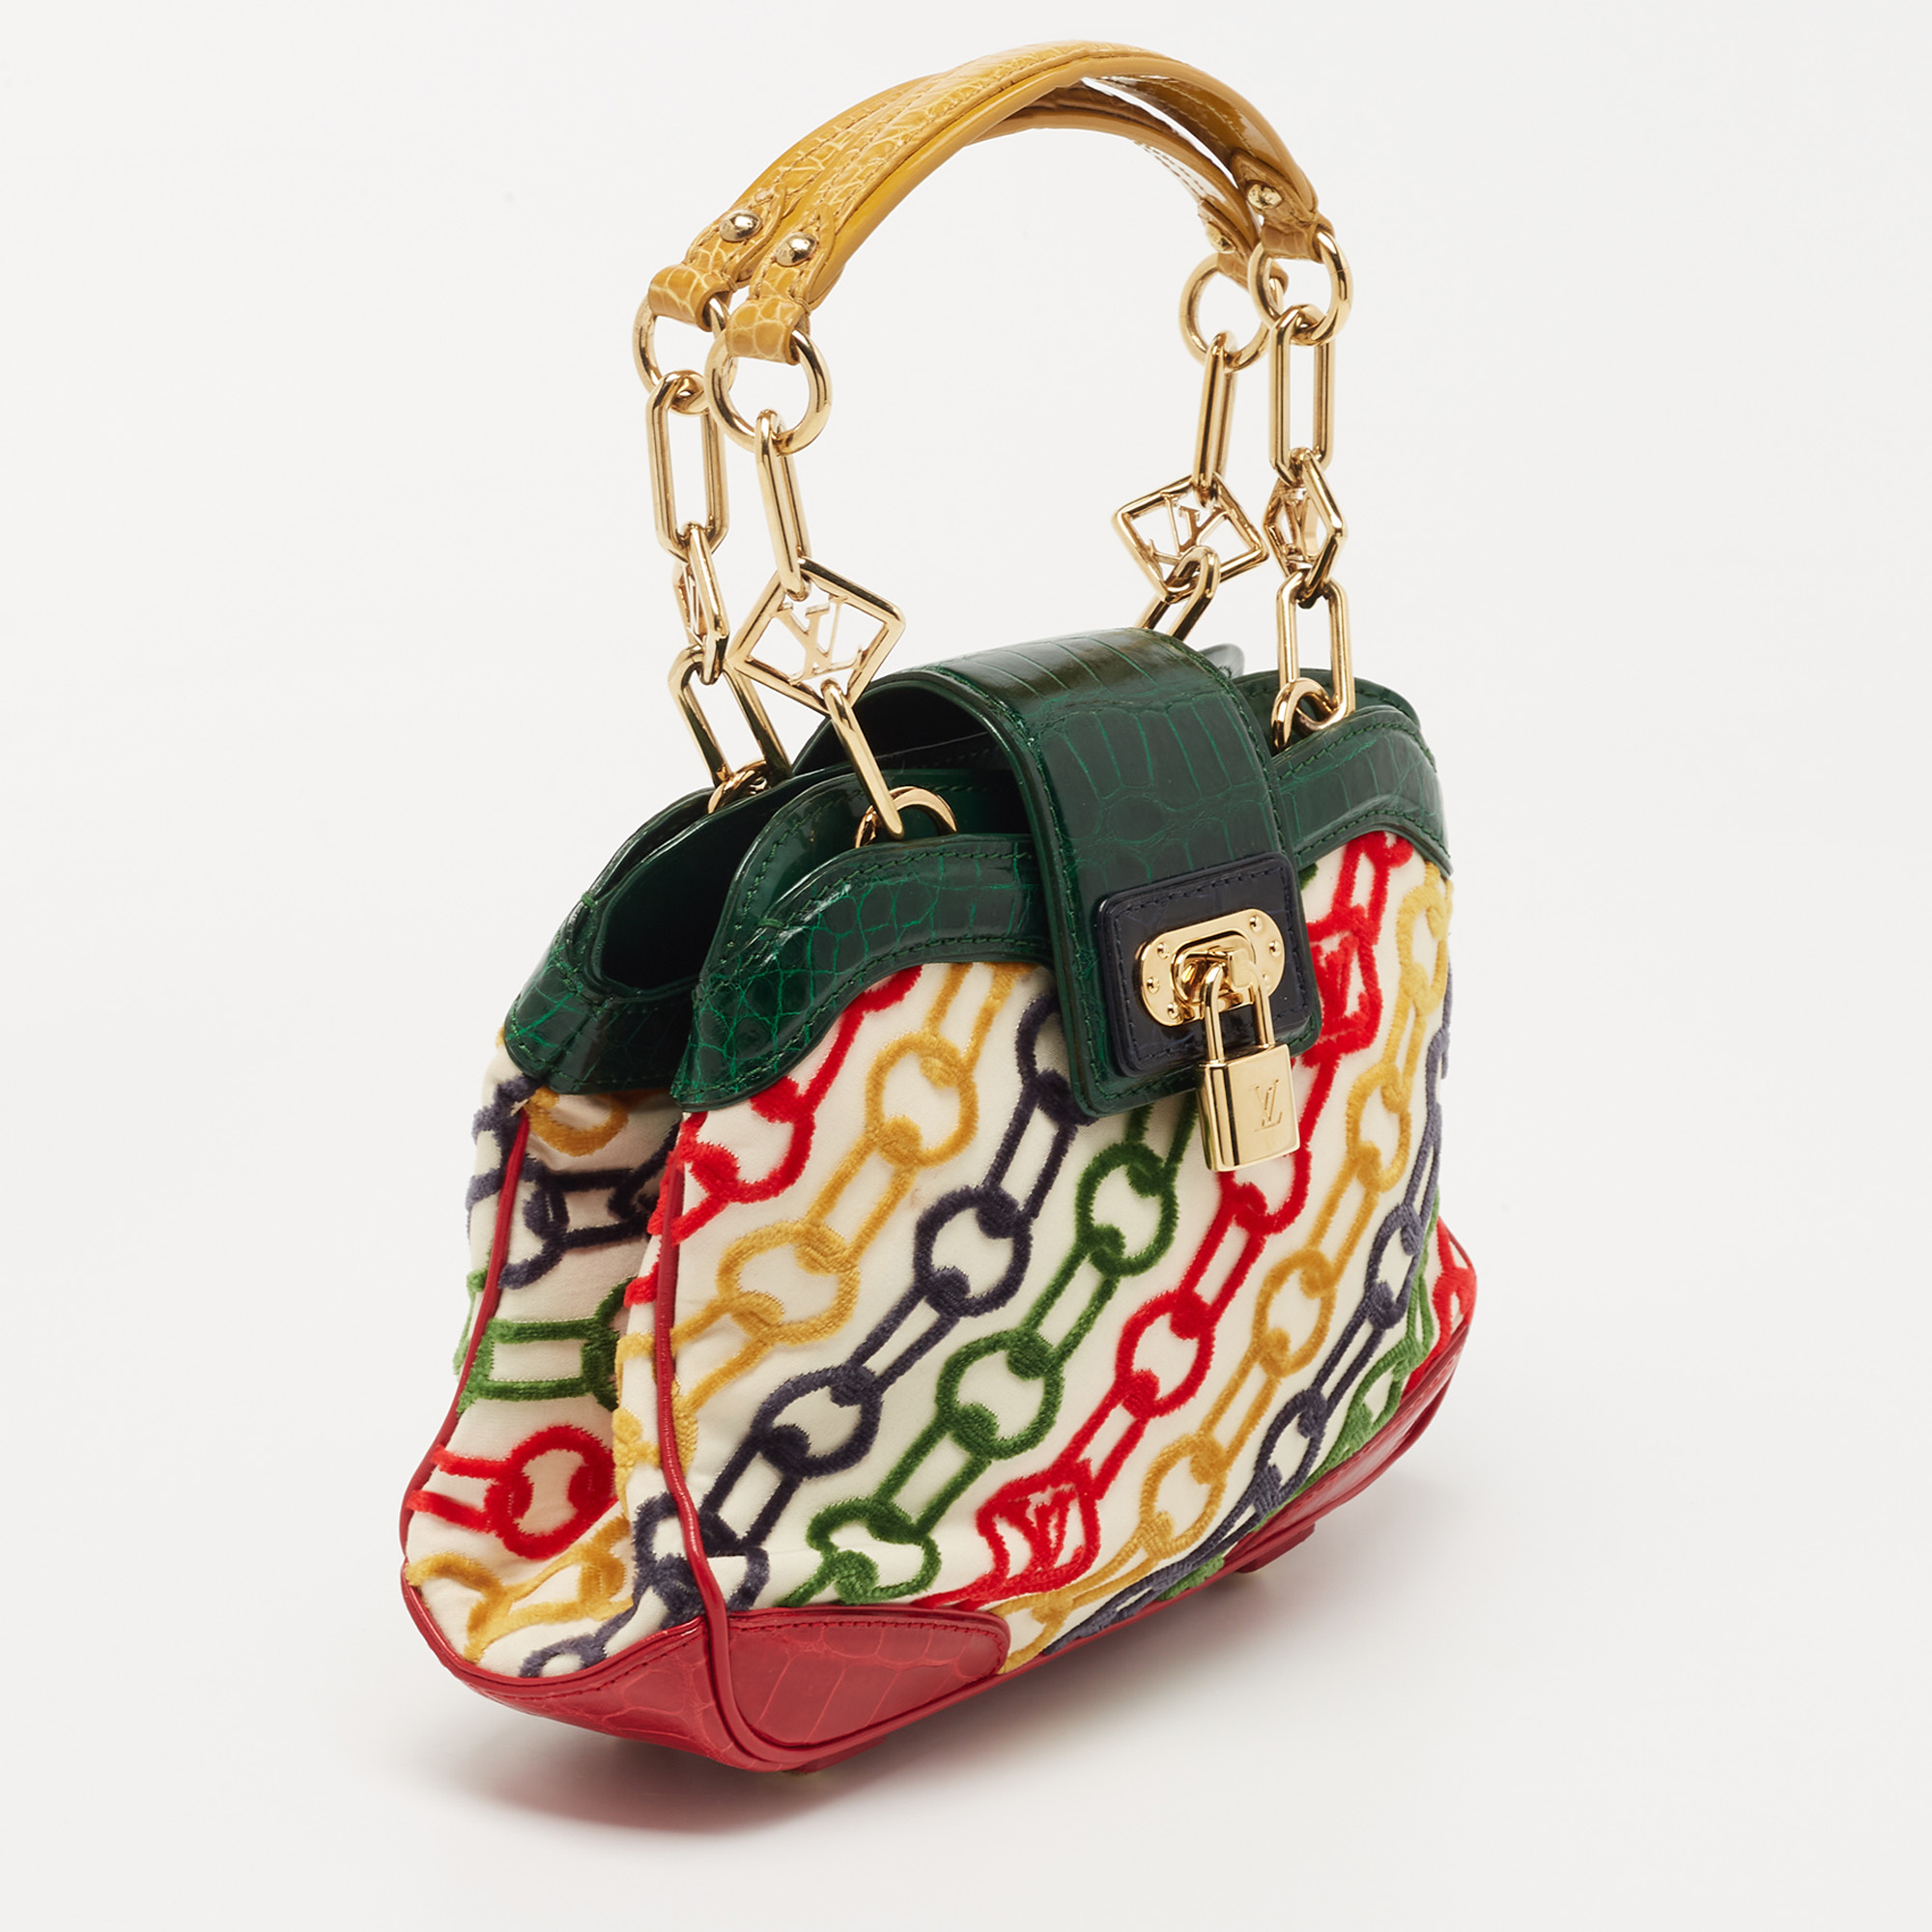 Bag charm Louis Vuitton Multicolour in Other - 34542137